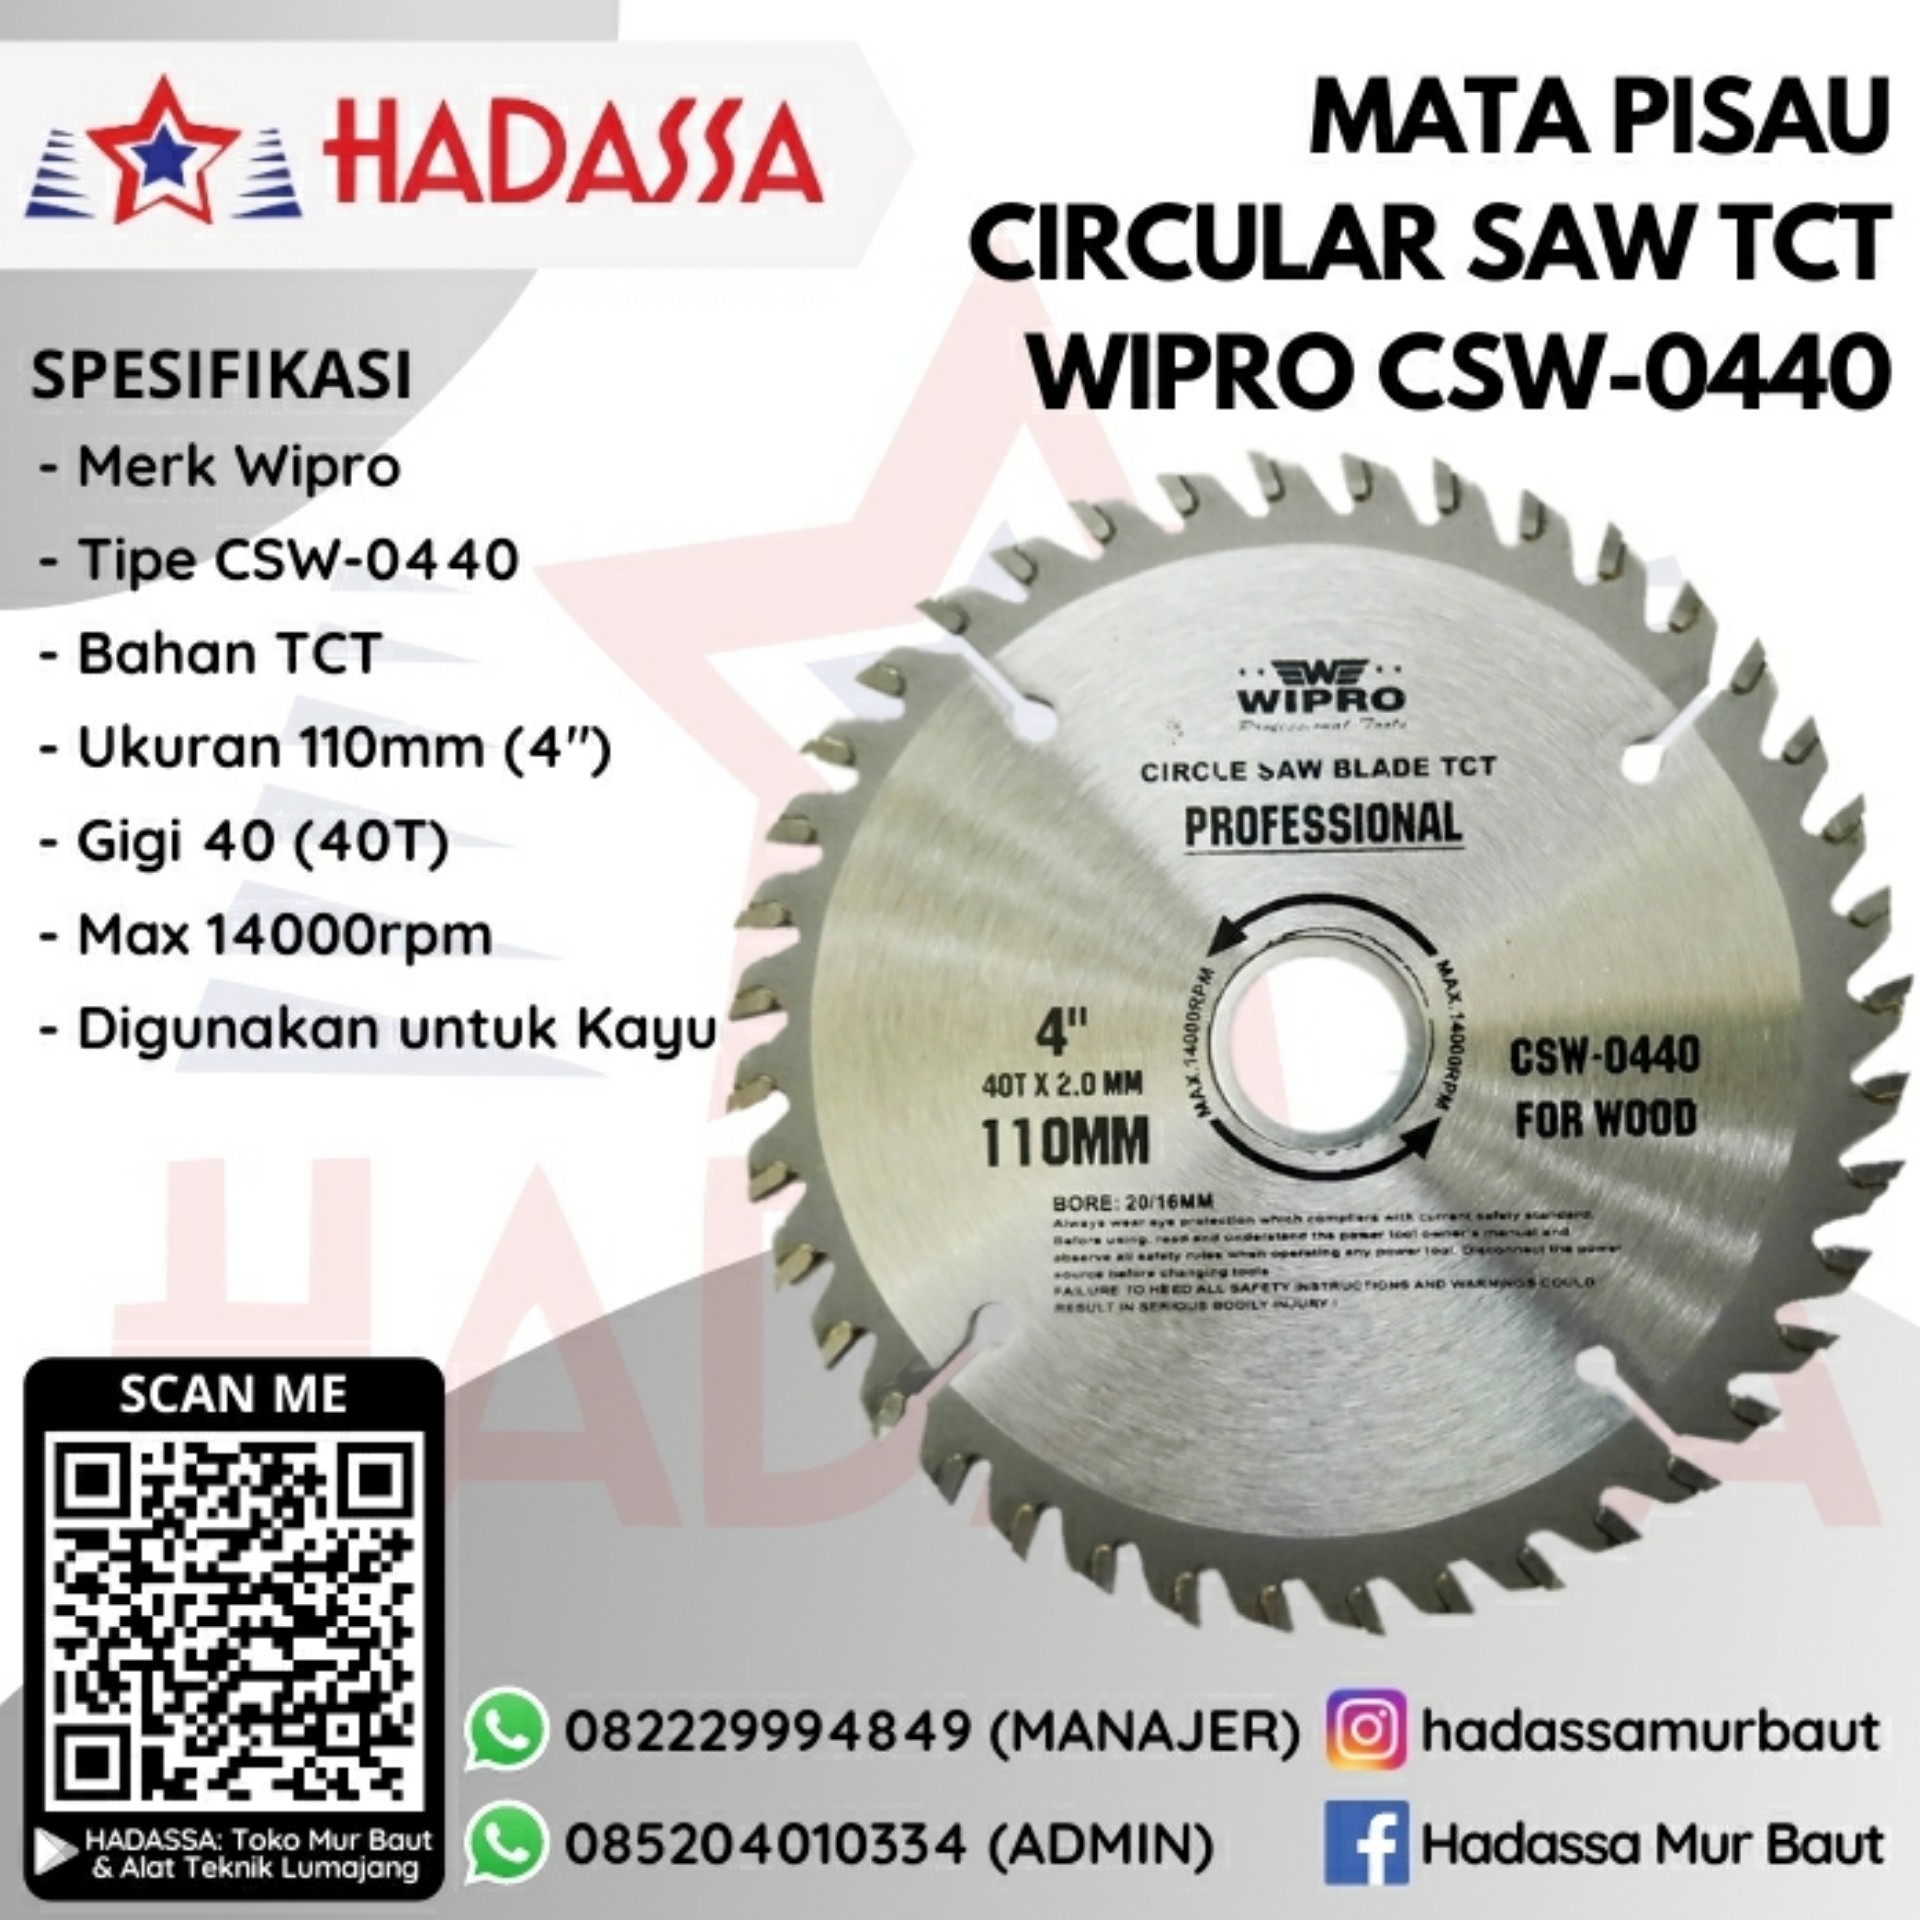 Mata Pisau Circular Saw TCT Wipro CSW-0440